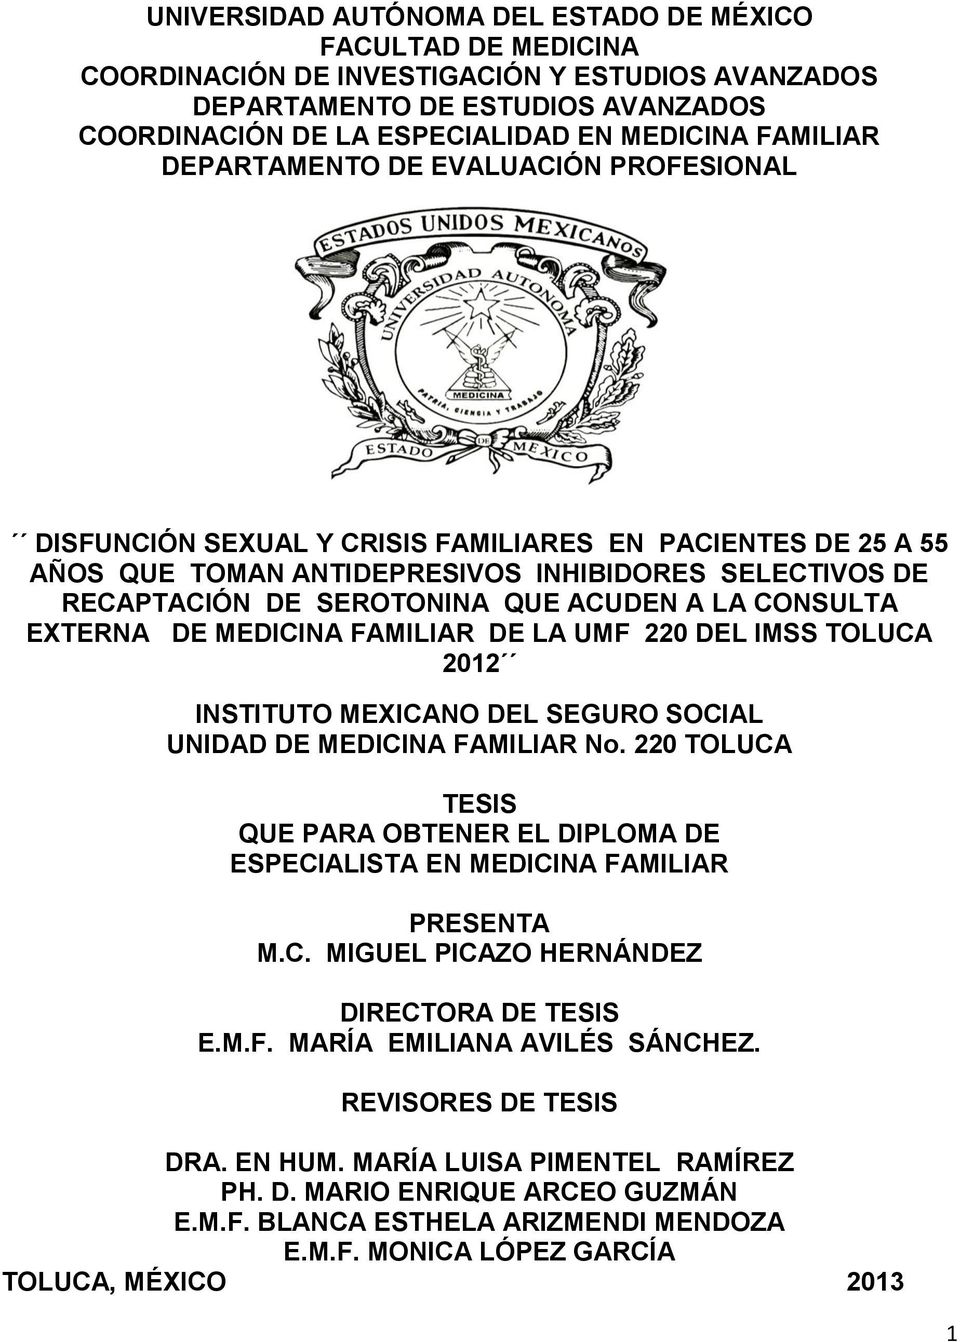 ACUDEN A LA CONSULTA EXTERNA DE MEDICINA FAMILIAR DE LA UMF 220 DEL IMSS TOLUCA 2012 INSTITUTO MEXICANO DEL SEGURO SOCIAL UNIDAD DE MEDICINA FAMILIAR No.